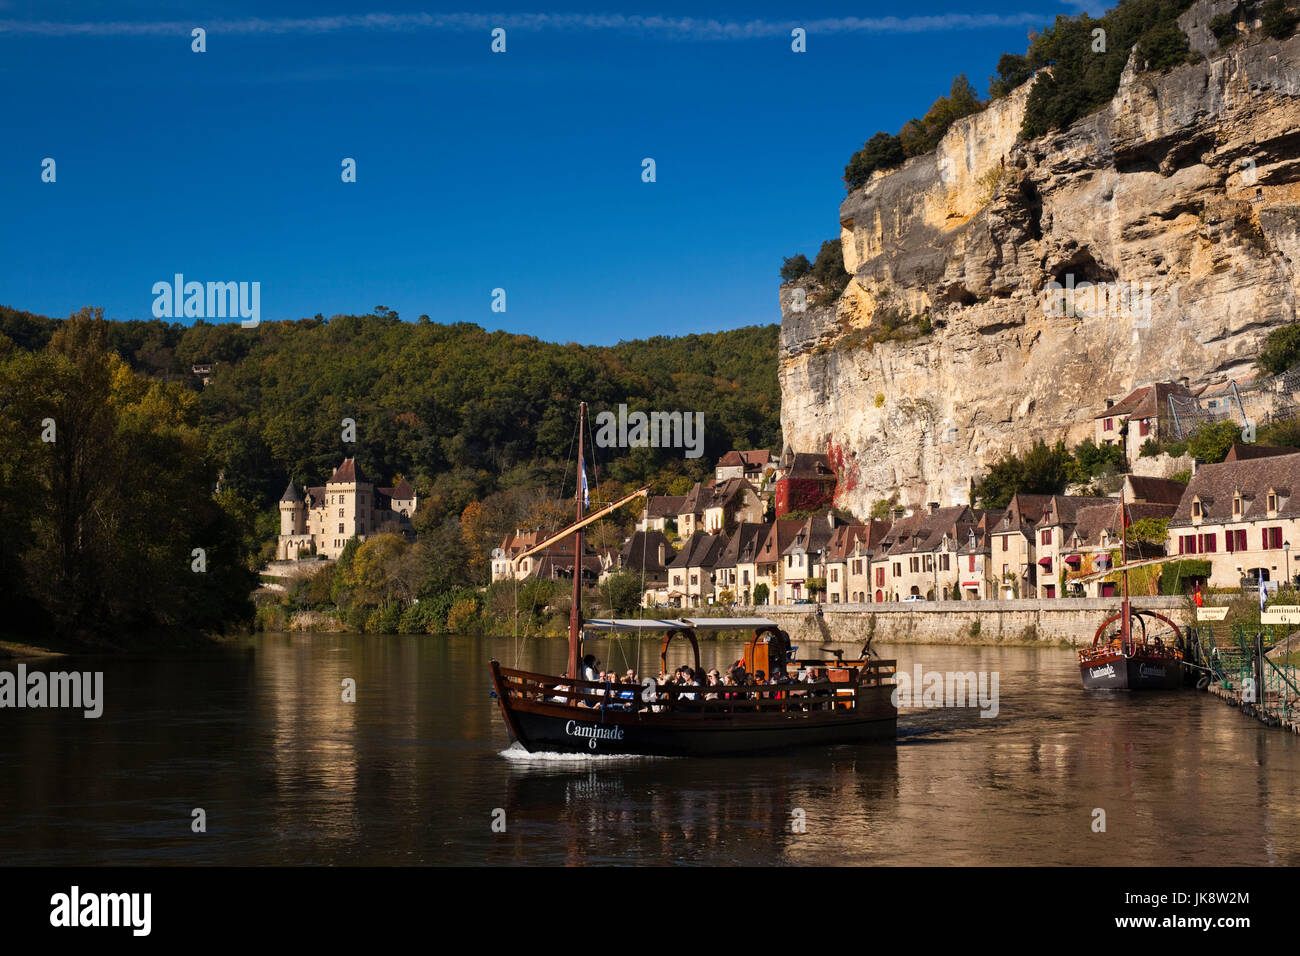 France, Aquitaine Region, Dordogne Department, La Roque Gageac, town on the Dordogne River and tour boats Stock Photo